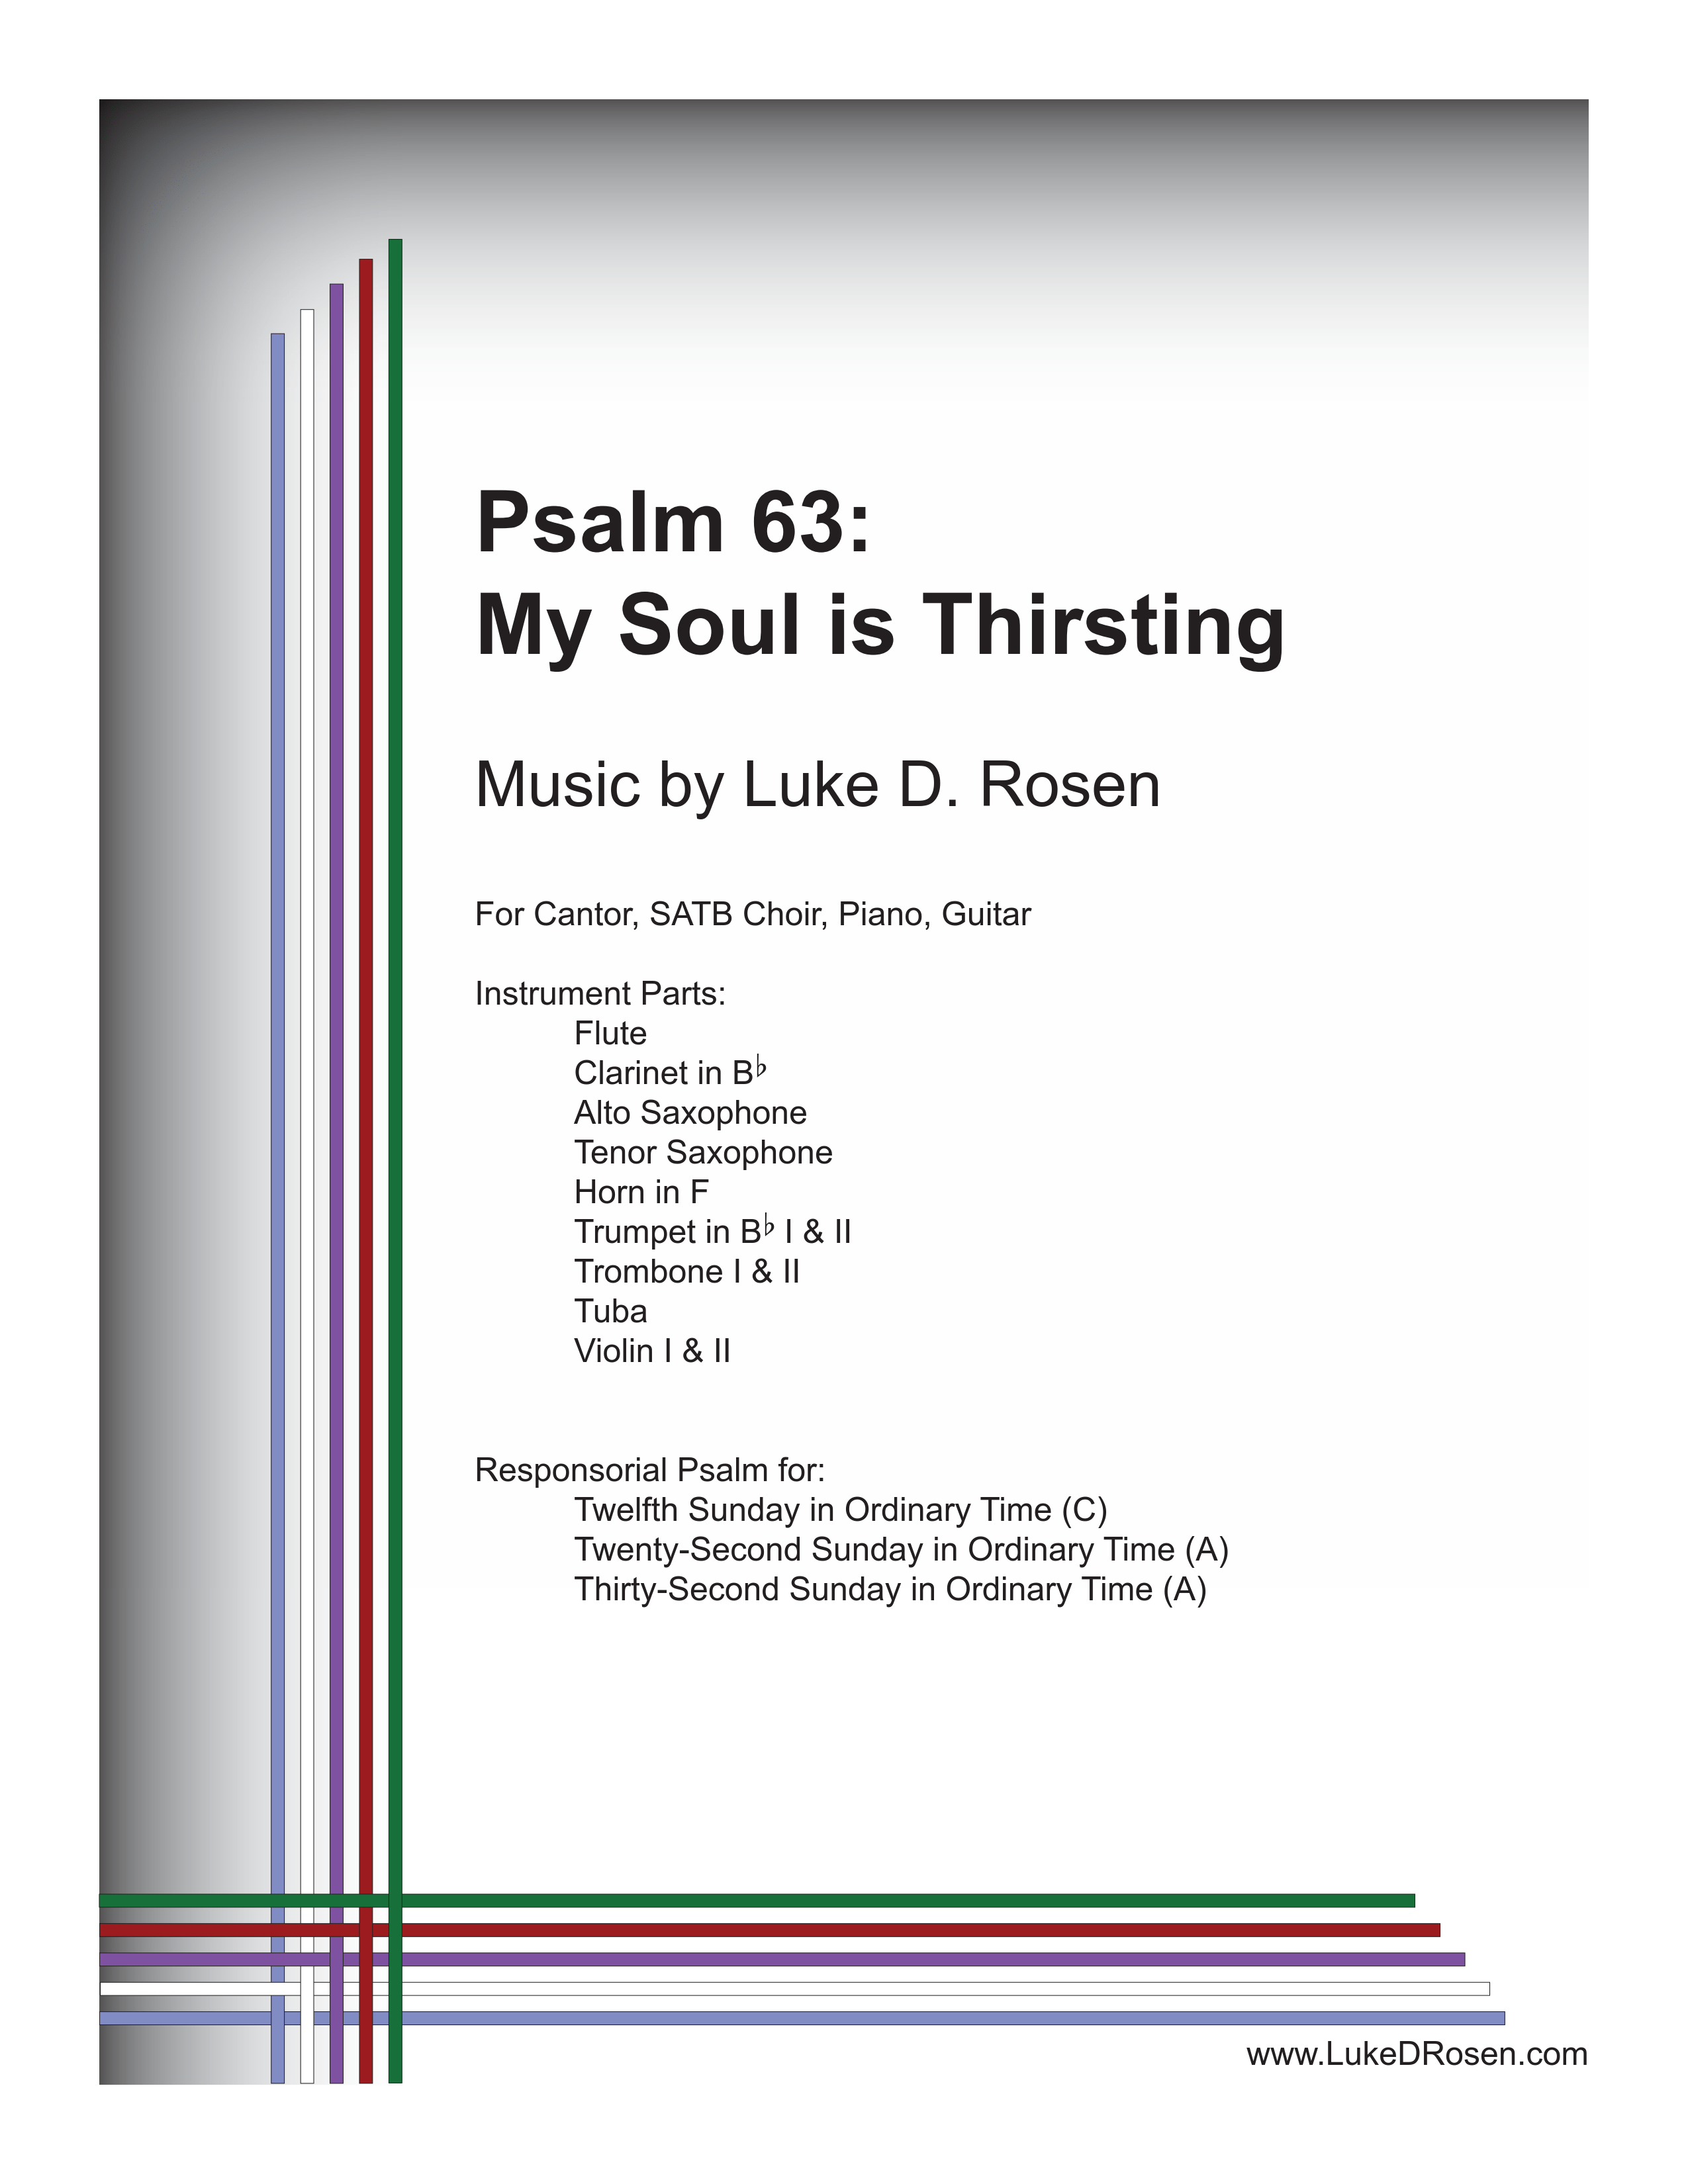 Psalm 63 – My Soul is Thirsting (Rosen)